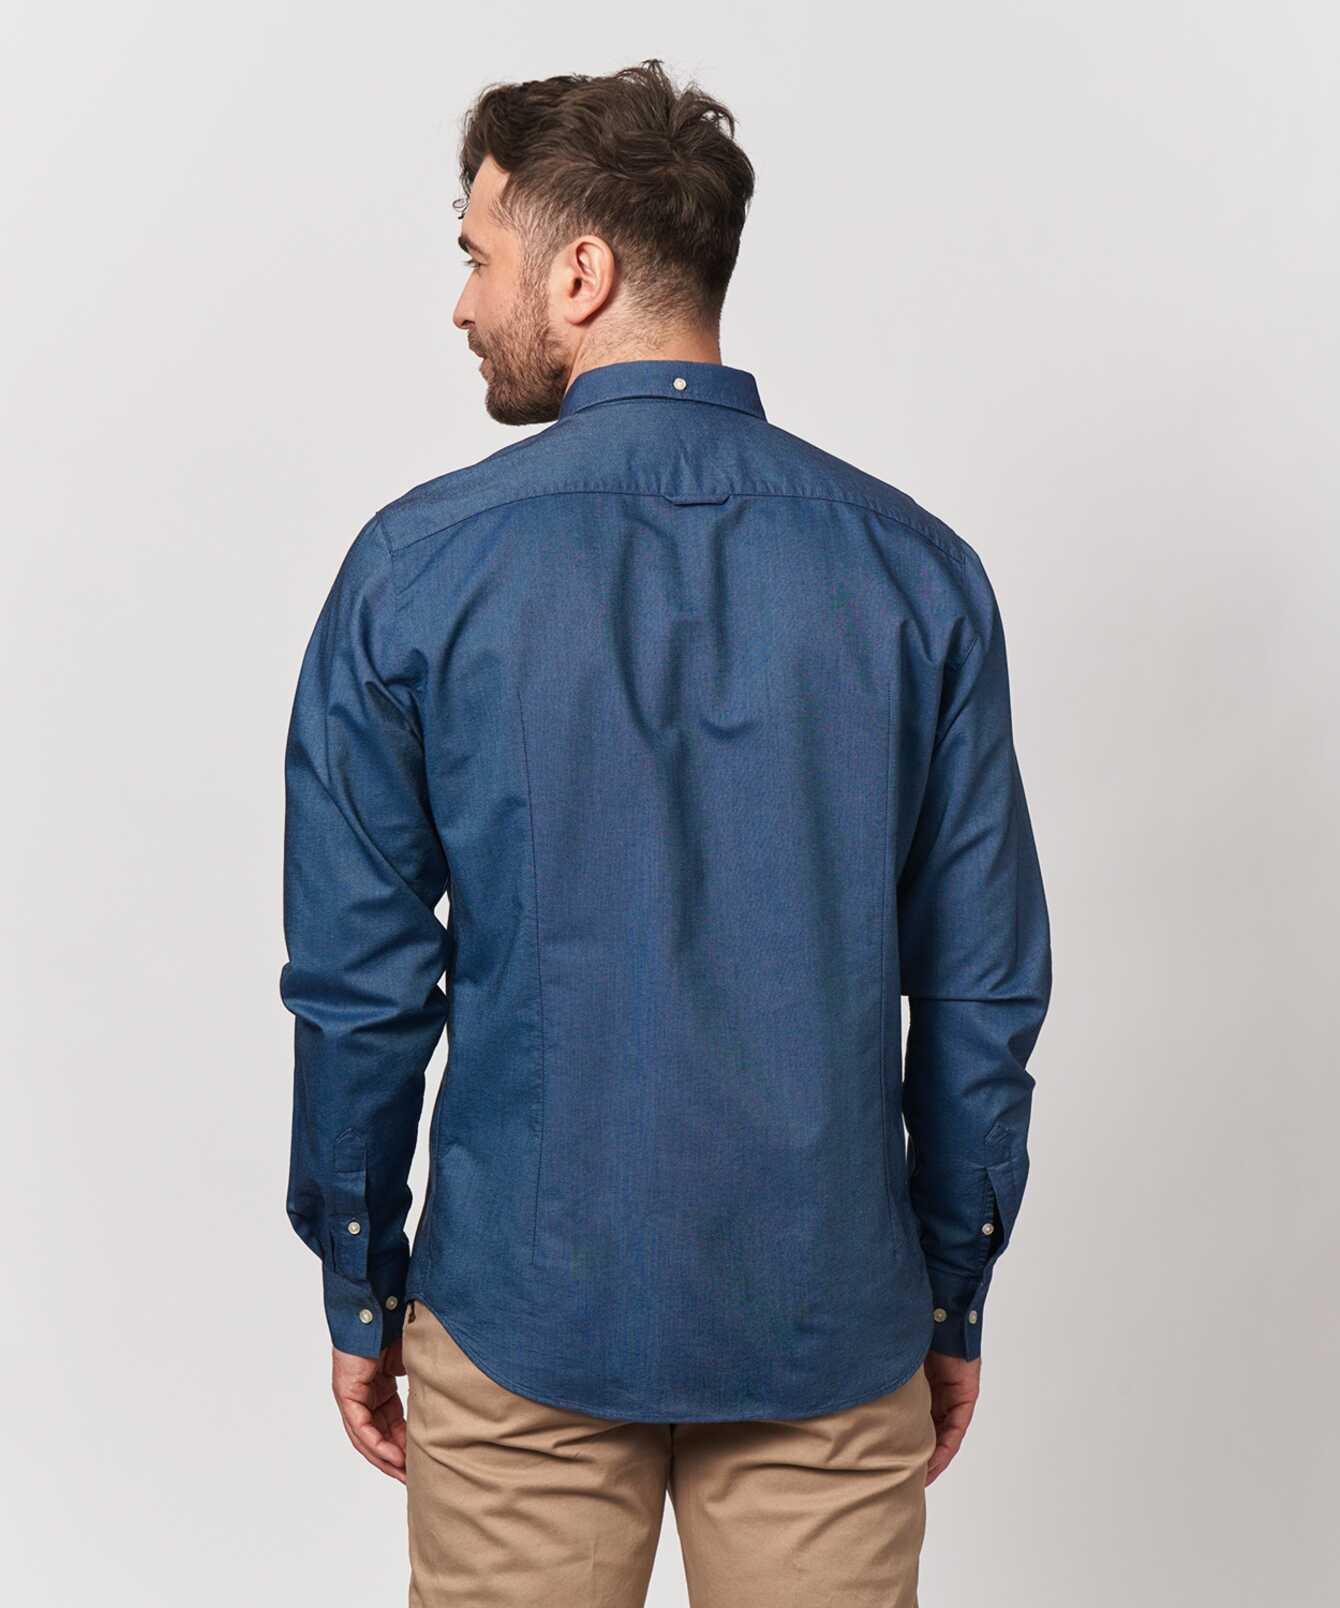 Shirt Boston Oxford Denim Blue Shirt Extra Long Sleeve The Shirt Factory